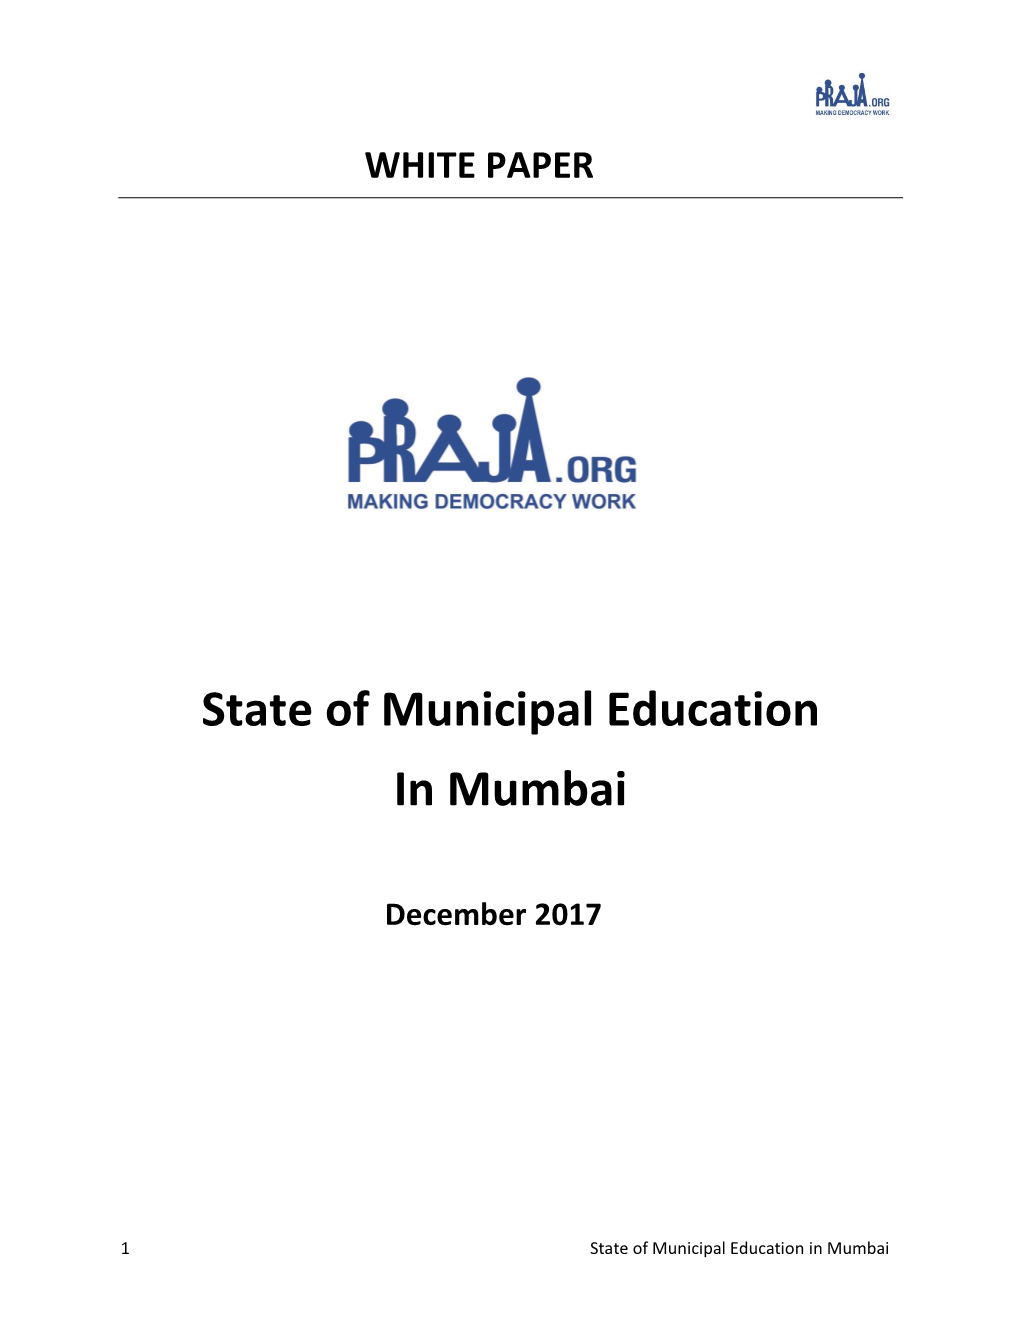 State of Municipal Education in Mumbai